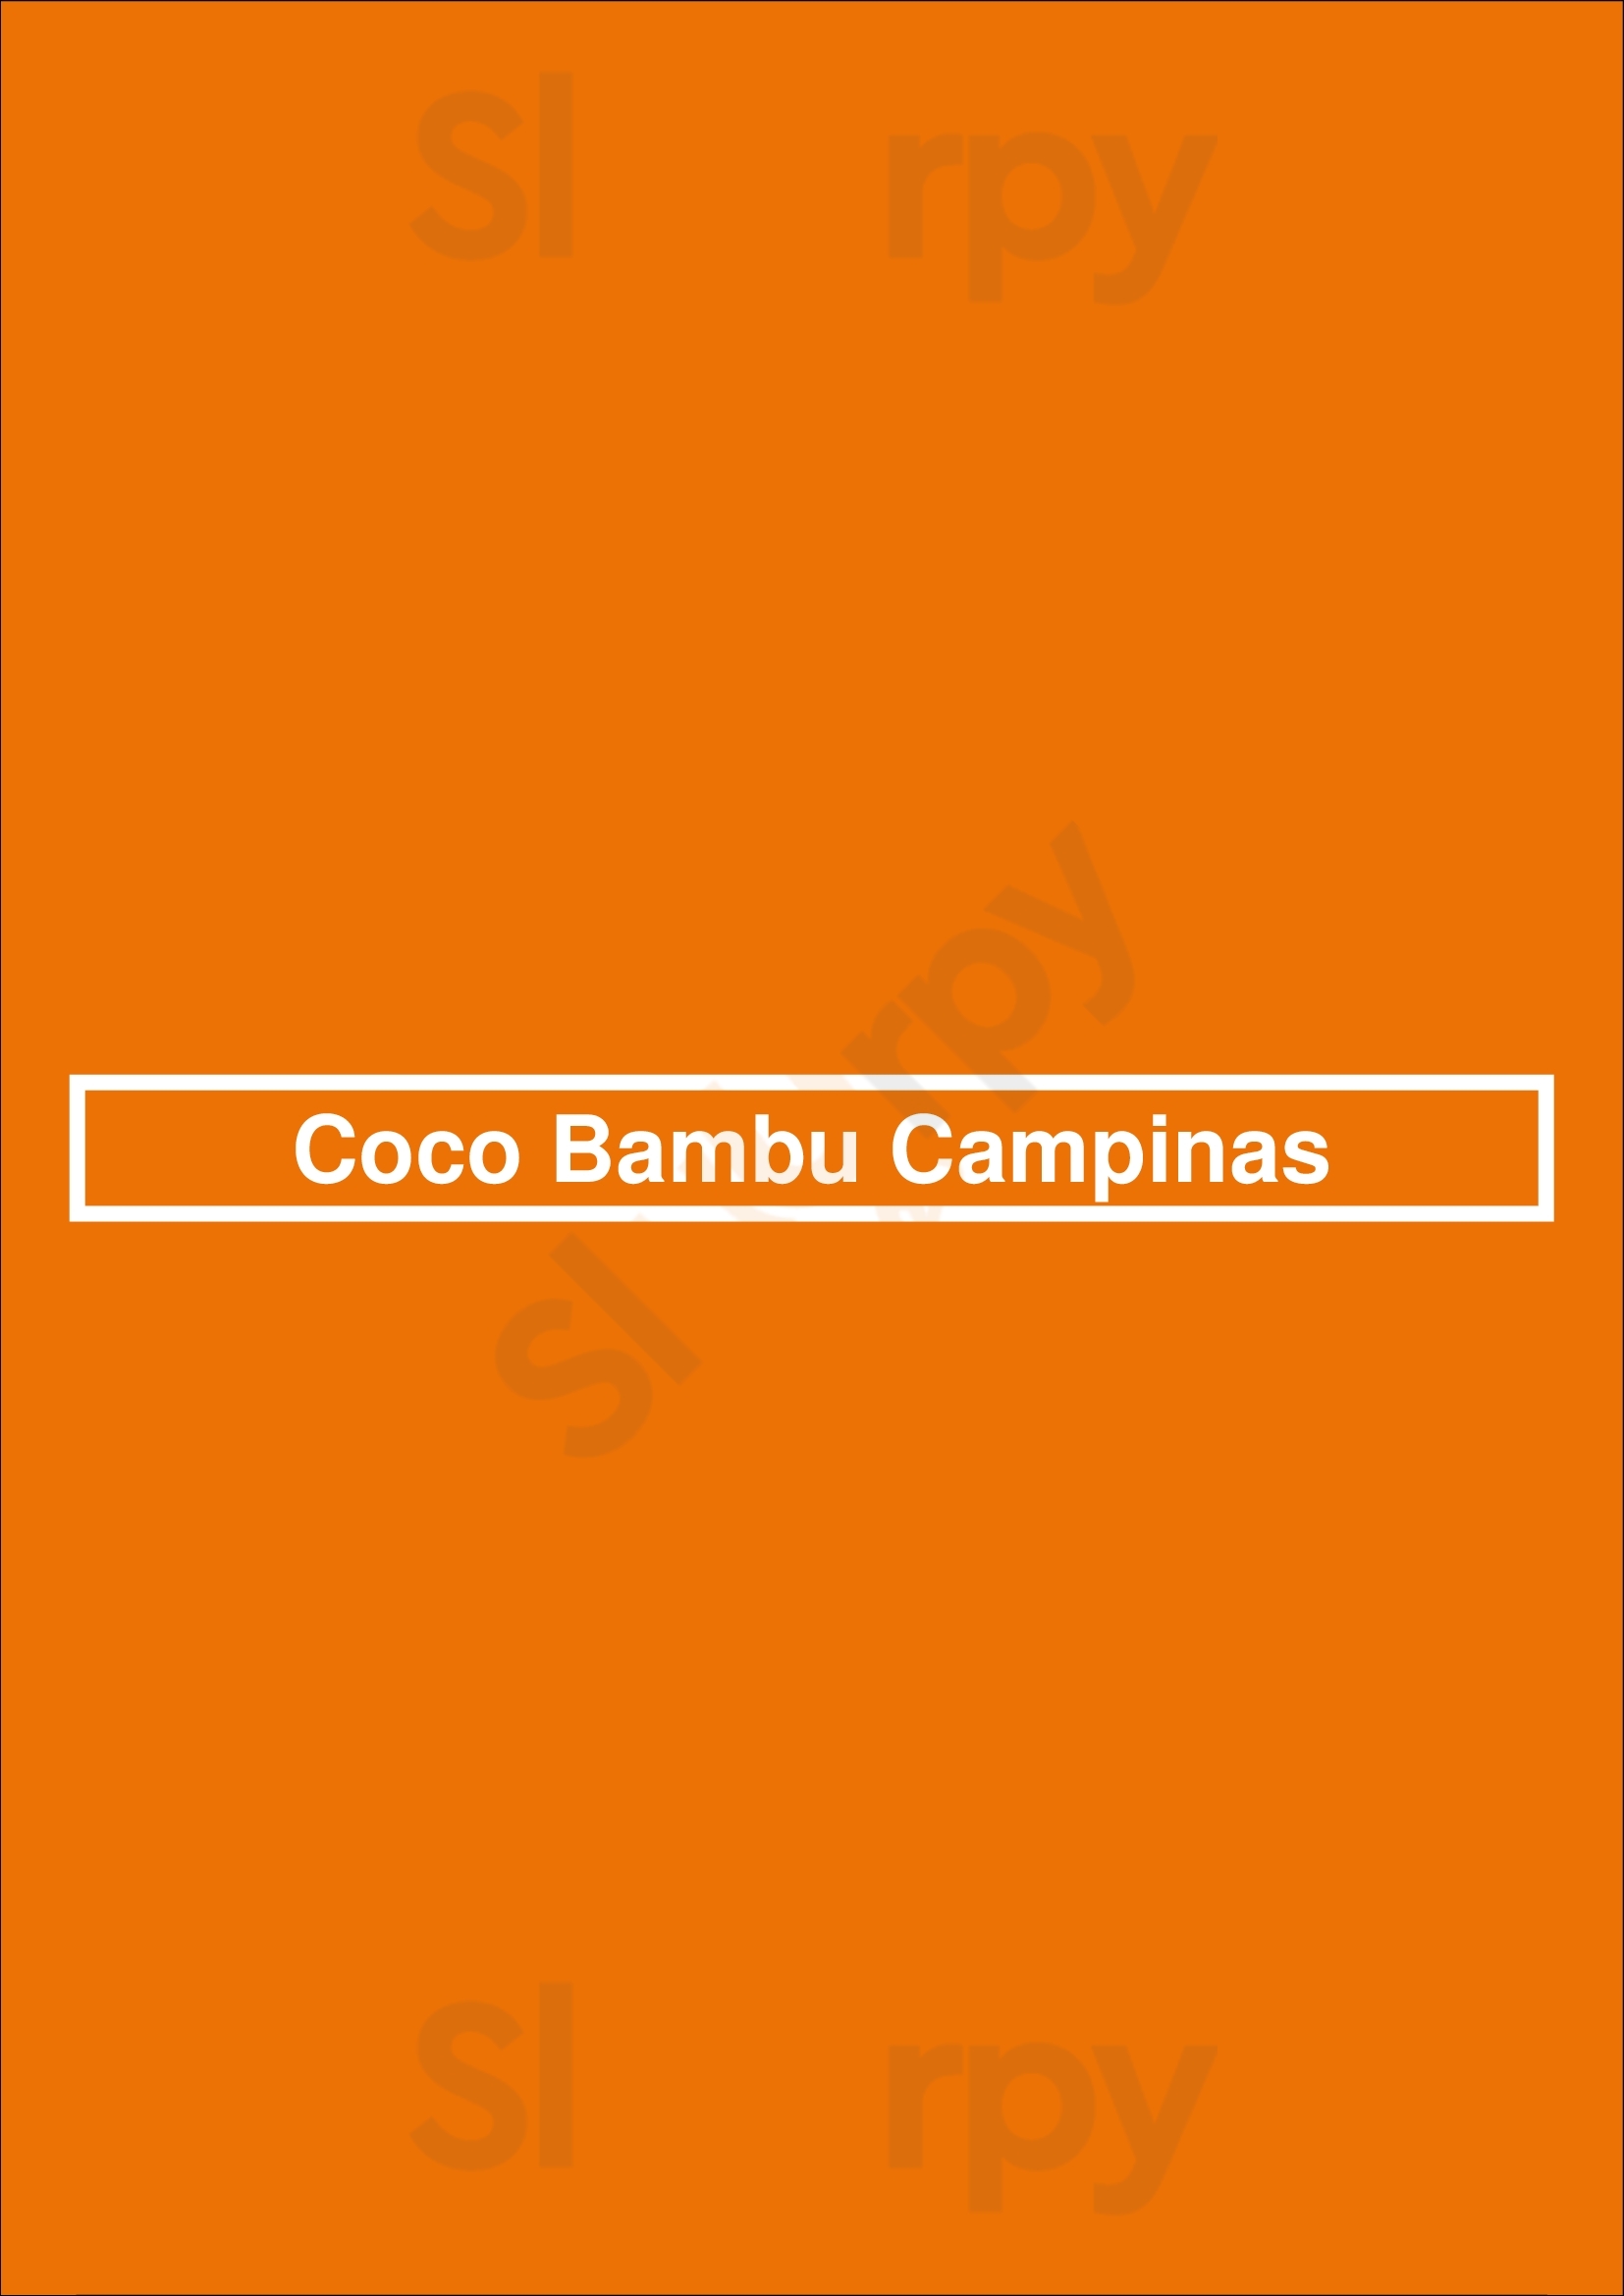 Coco Bambu Campinas Campinas Menu - 1